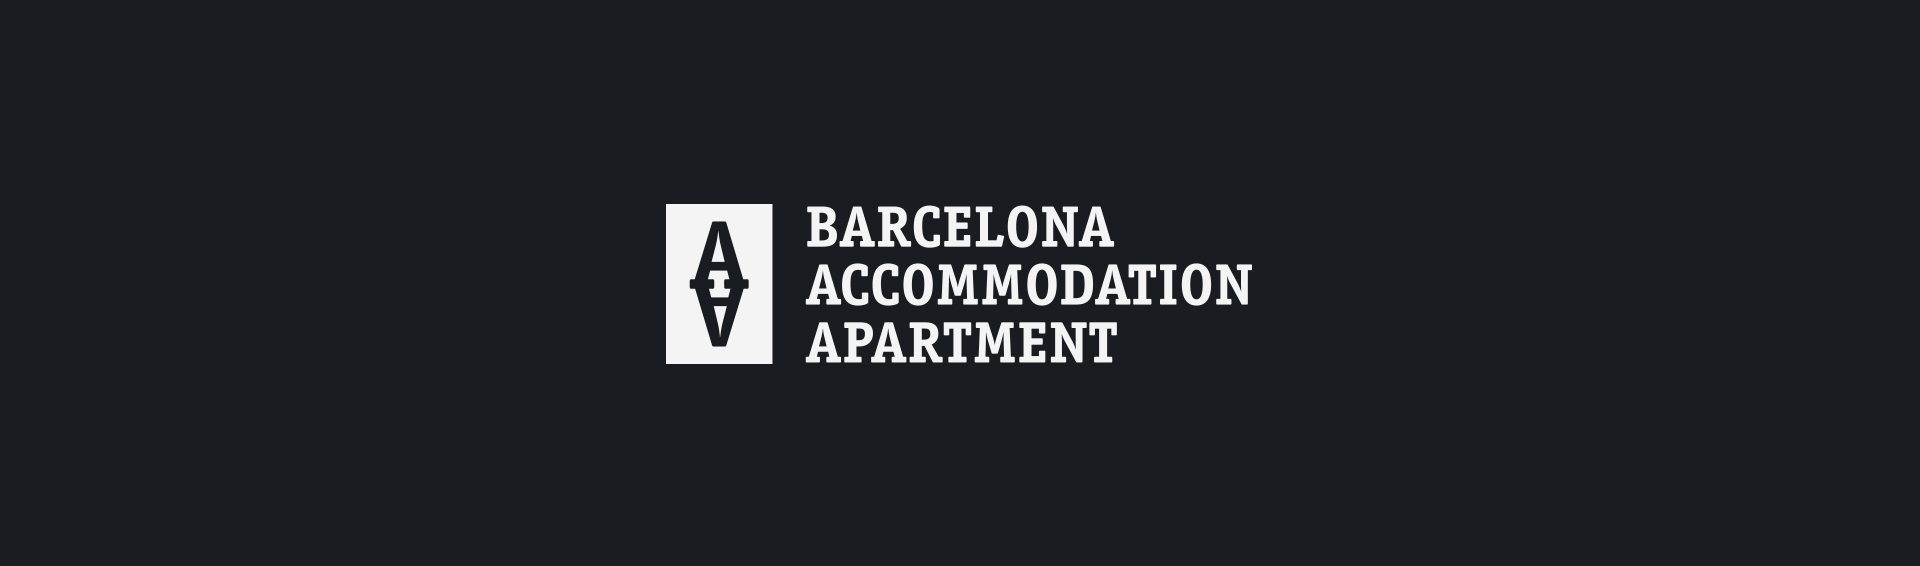 barcelona_logotype_identity_corporate